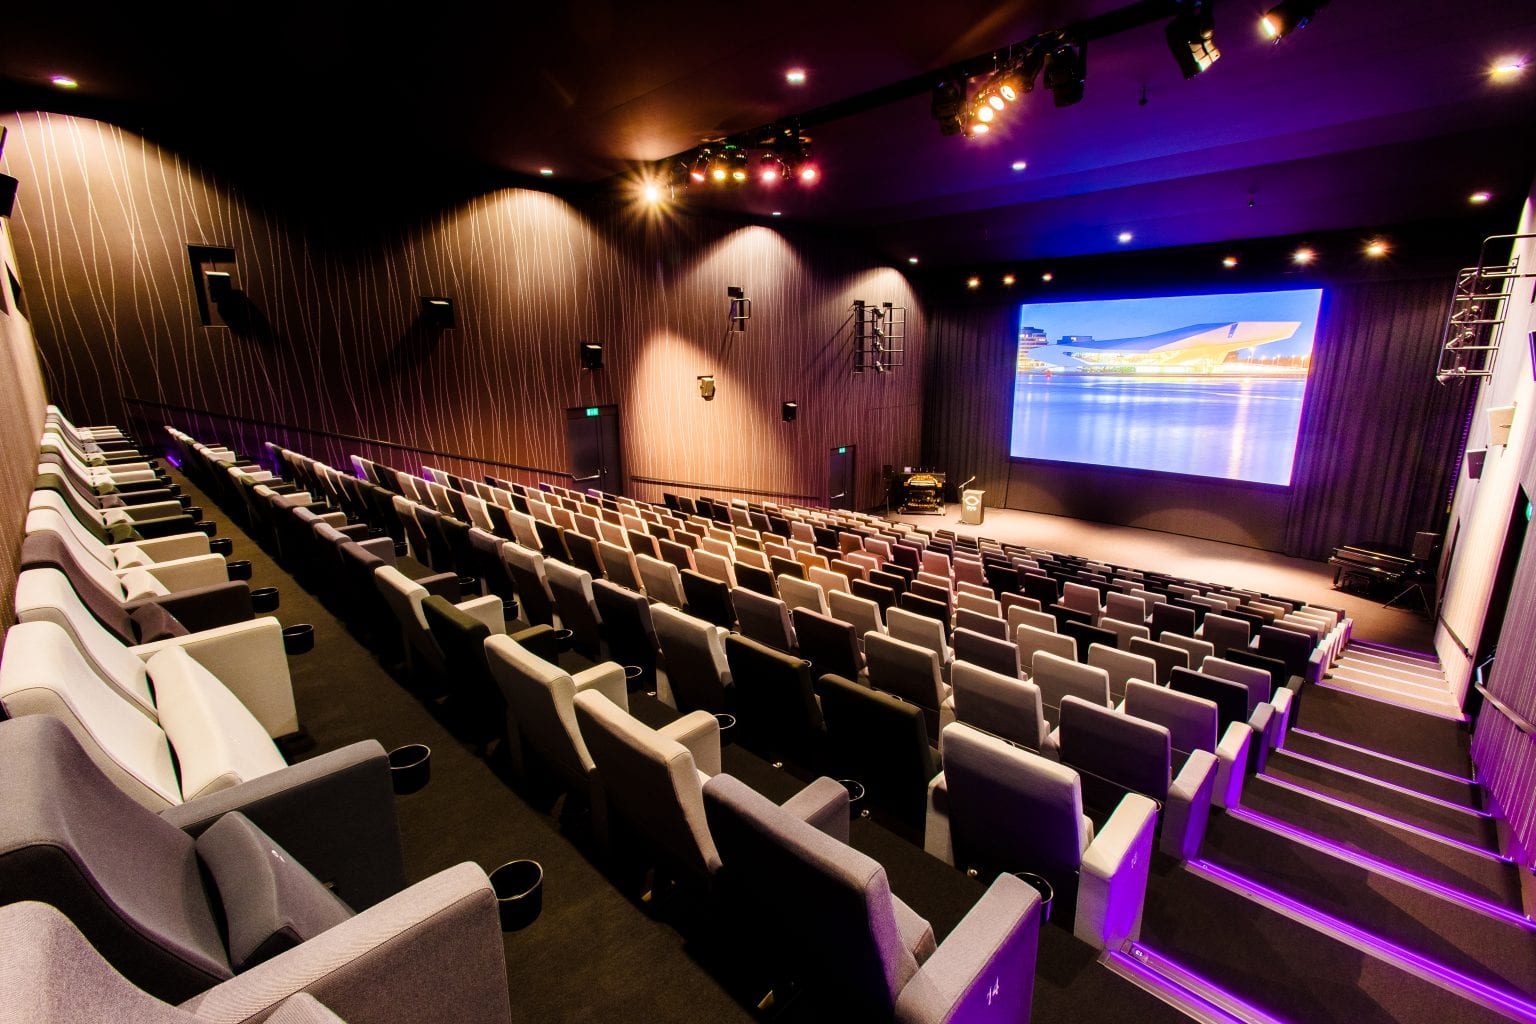 Cinema 1 - 315 seats